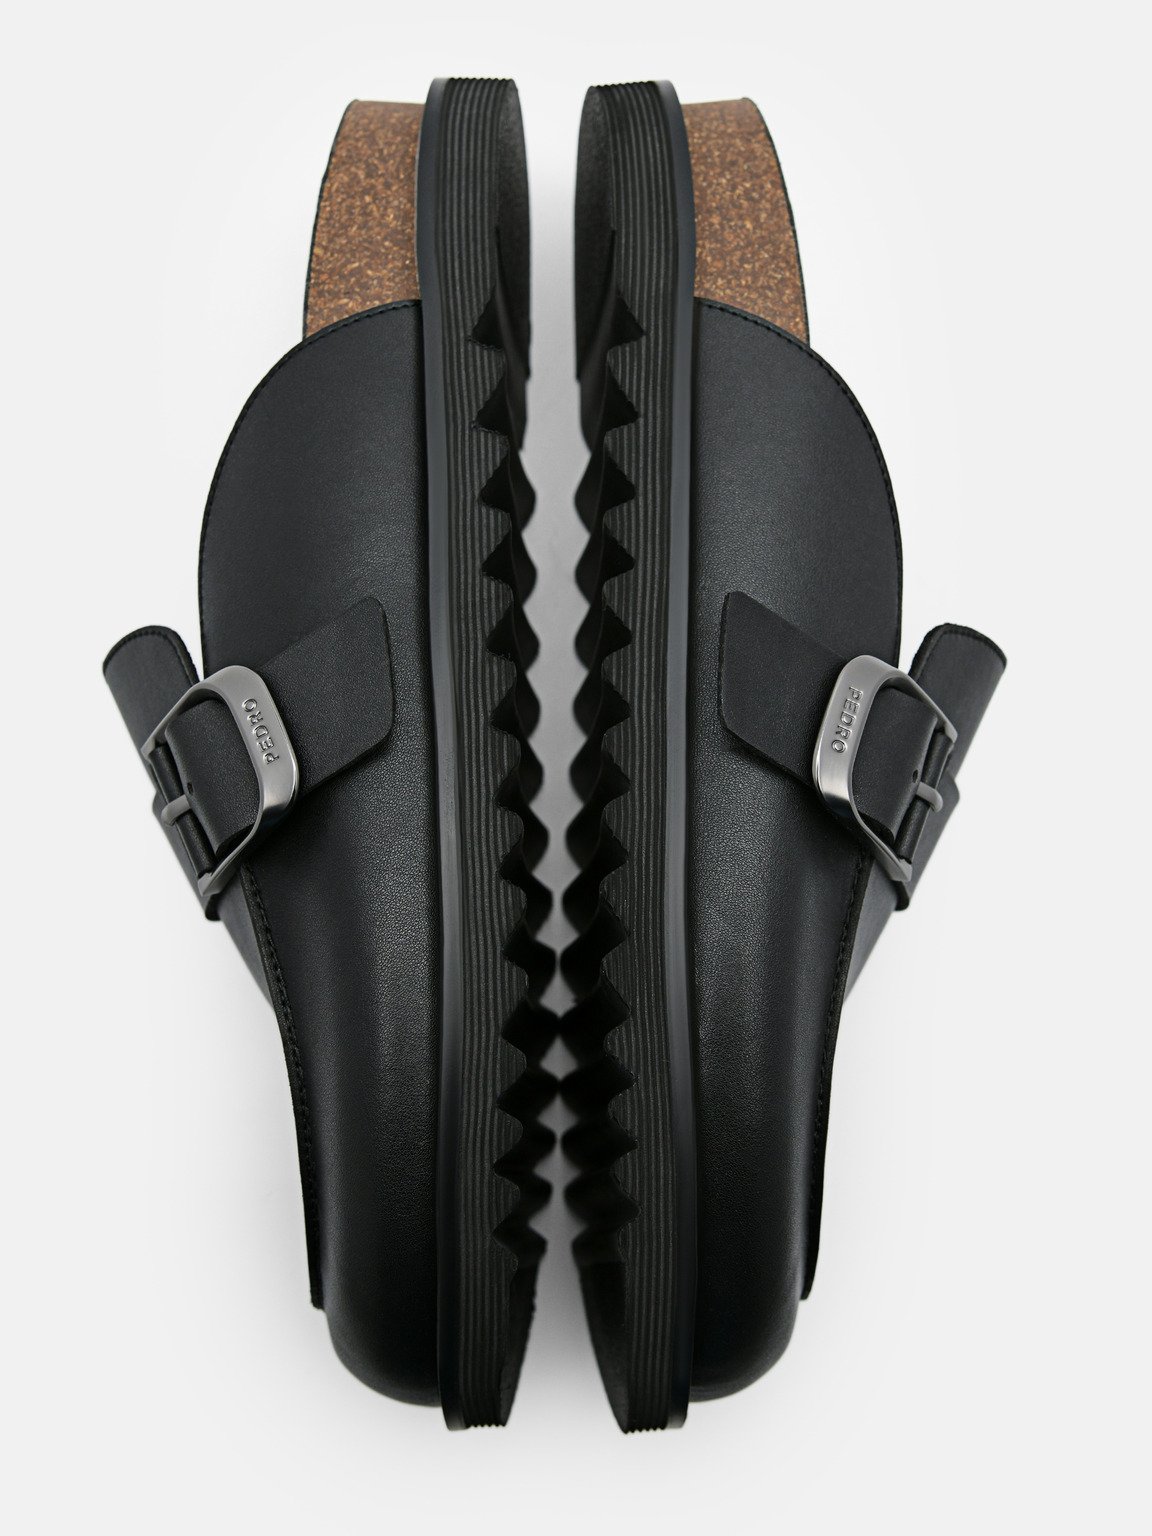 Men's Helix Slip-On Sandals, Black